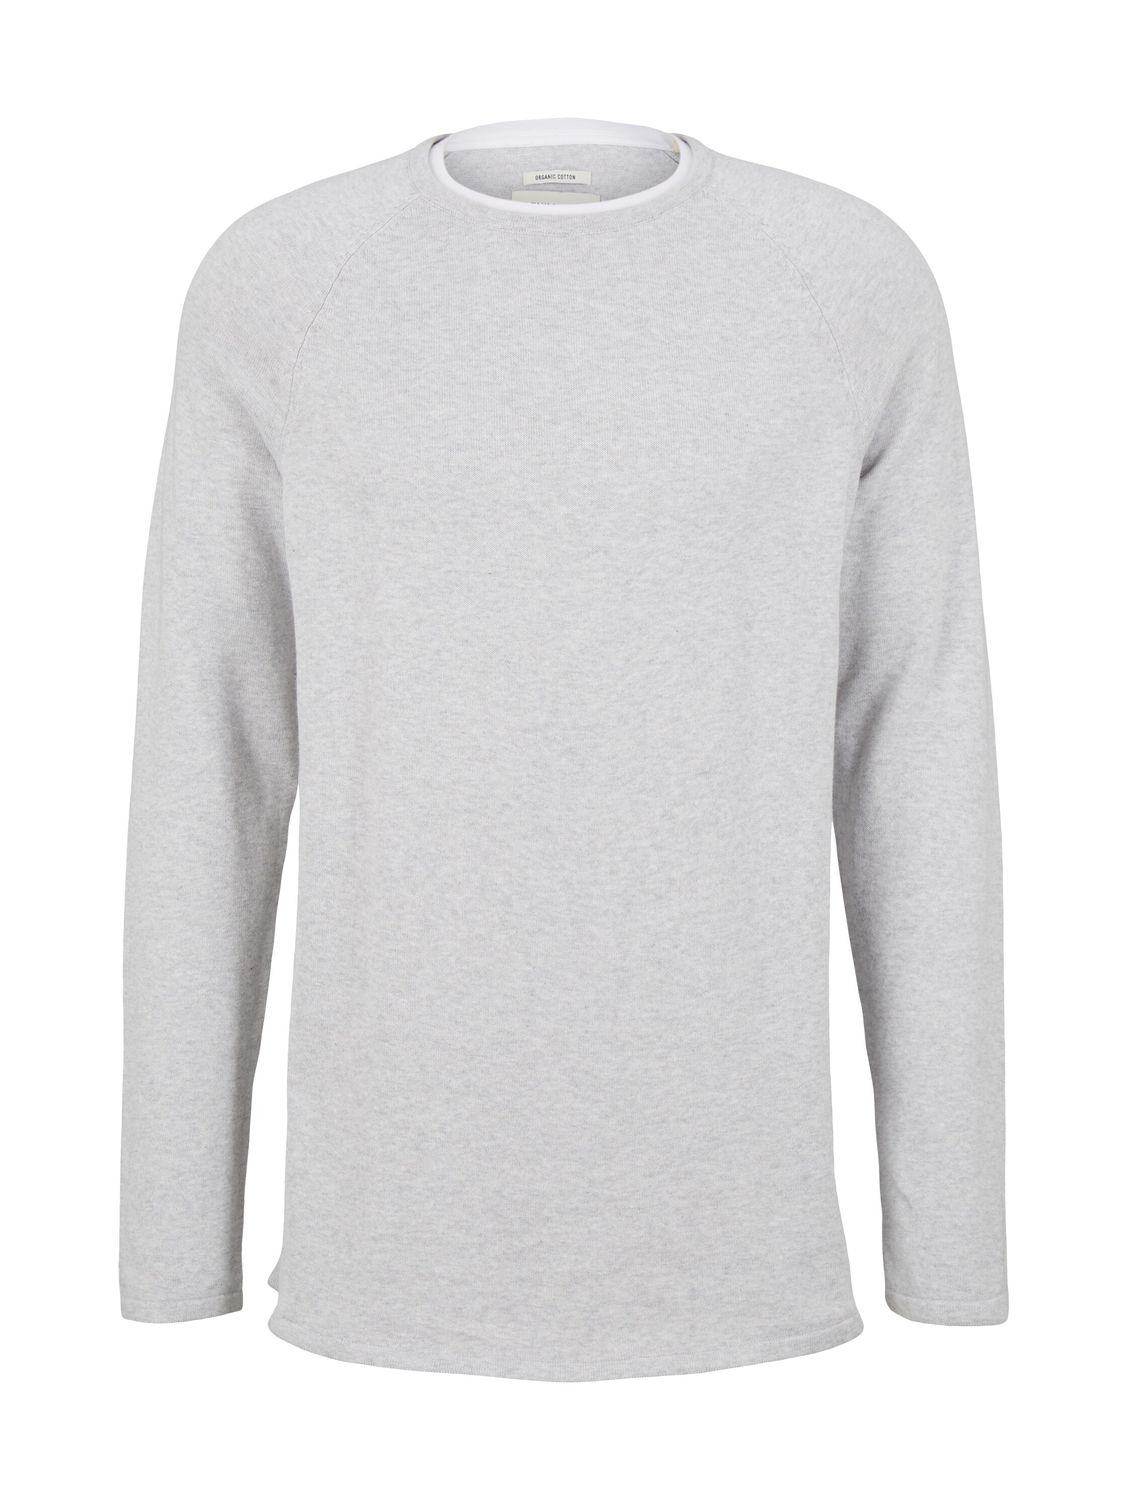 Пуловер TOM TAILOR Denim BASIC, серый худи tom tailor размер xl серый